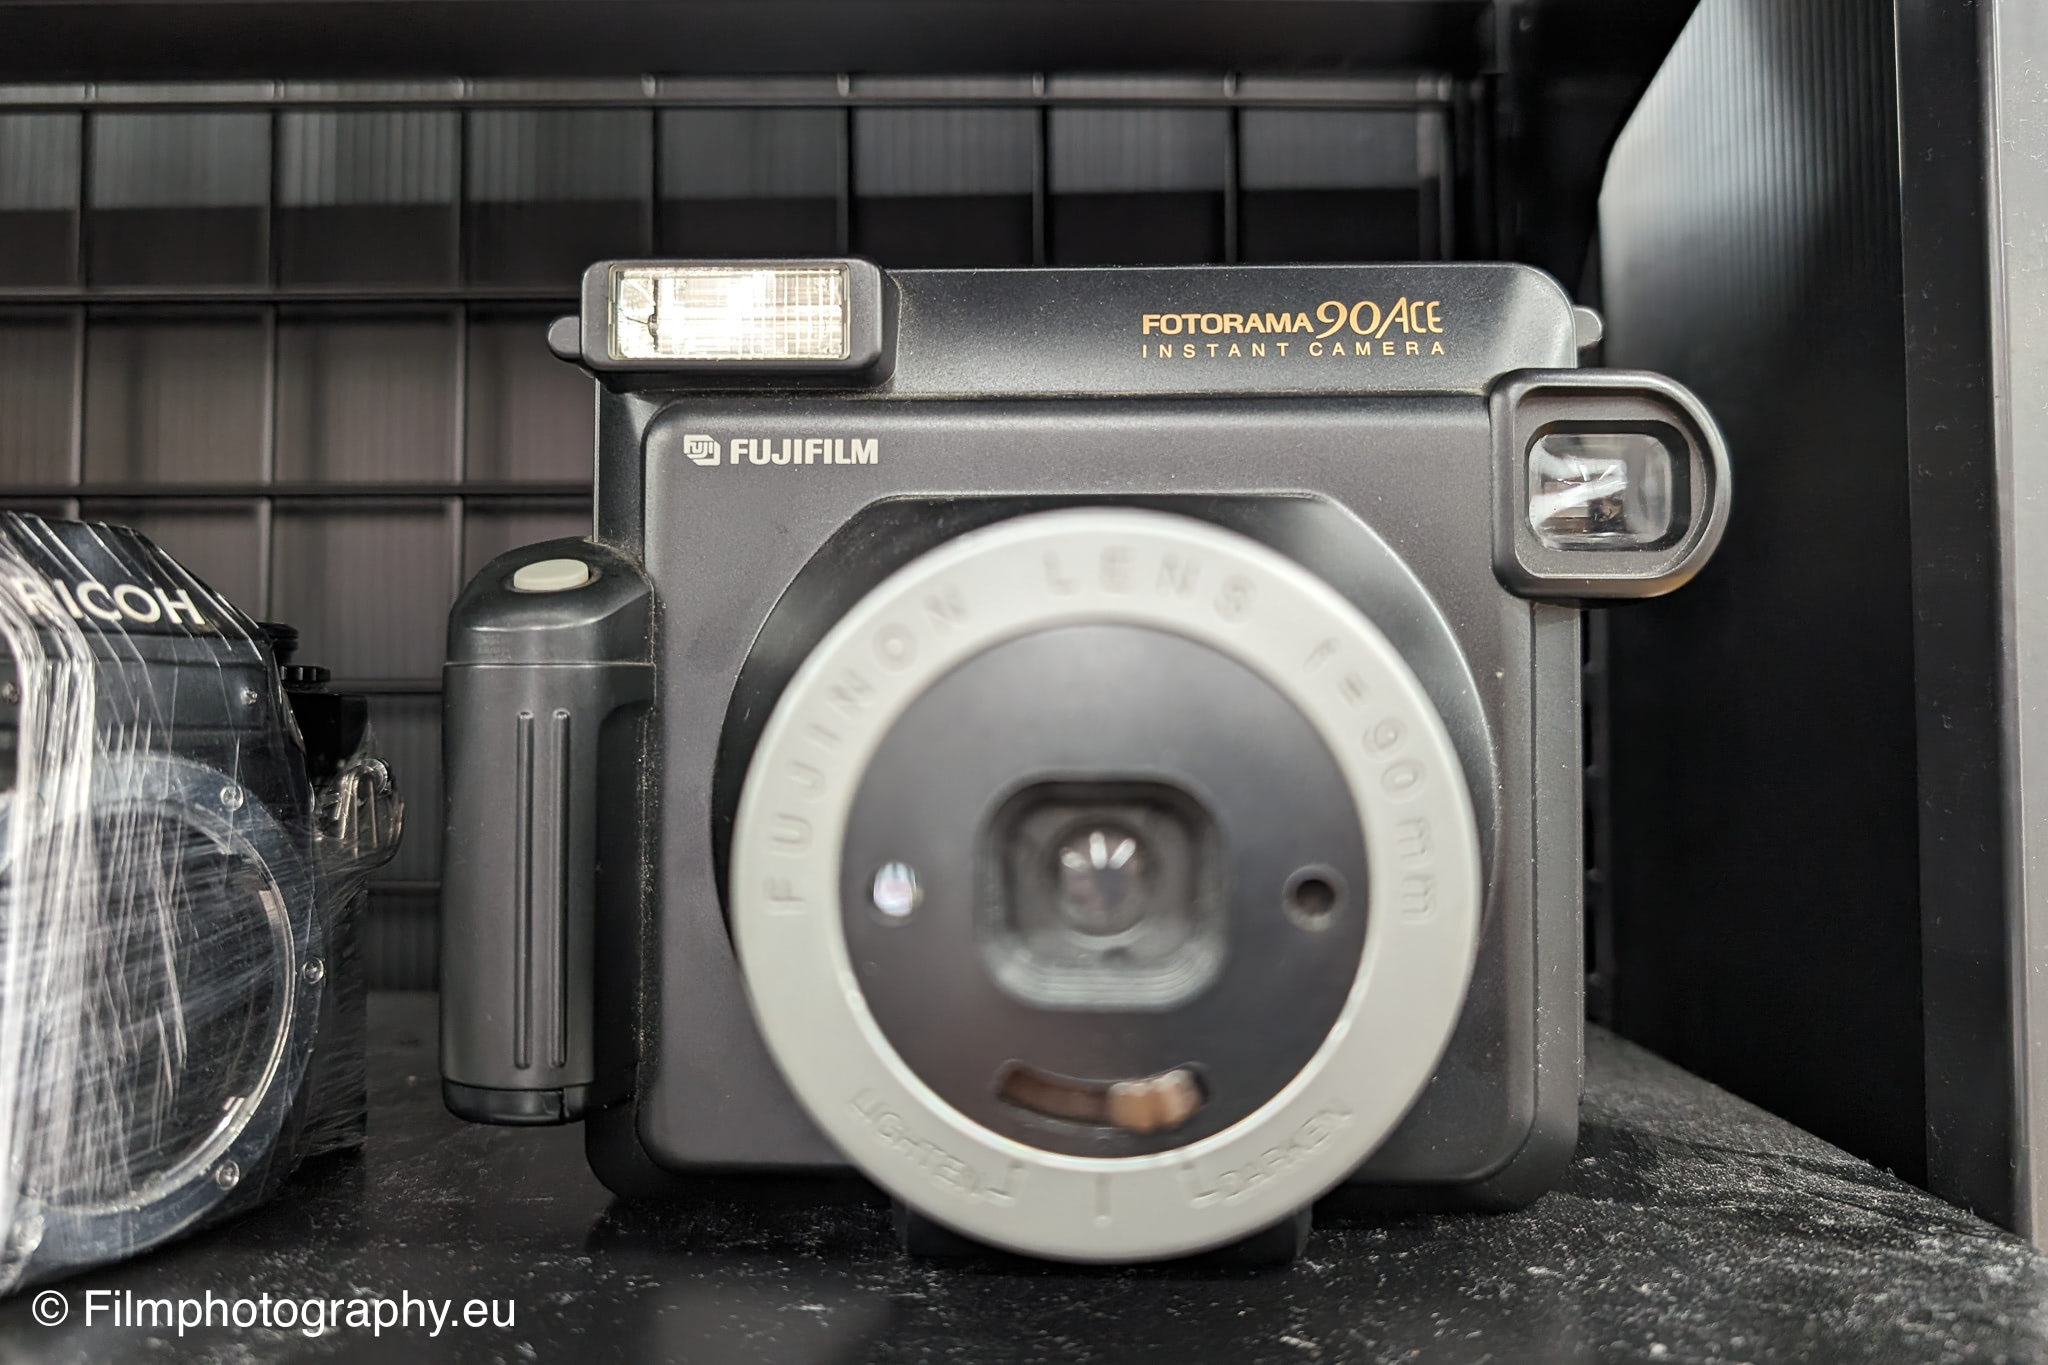 fujifilm-Fotorama-90ACE-instant-camera